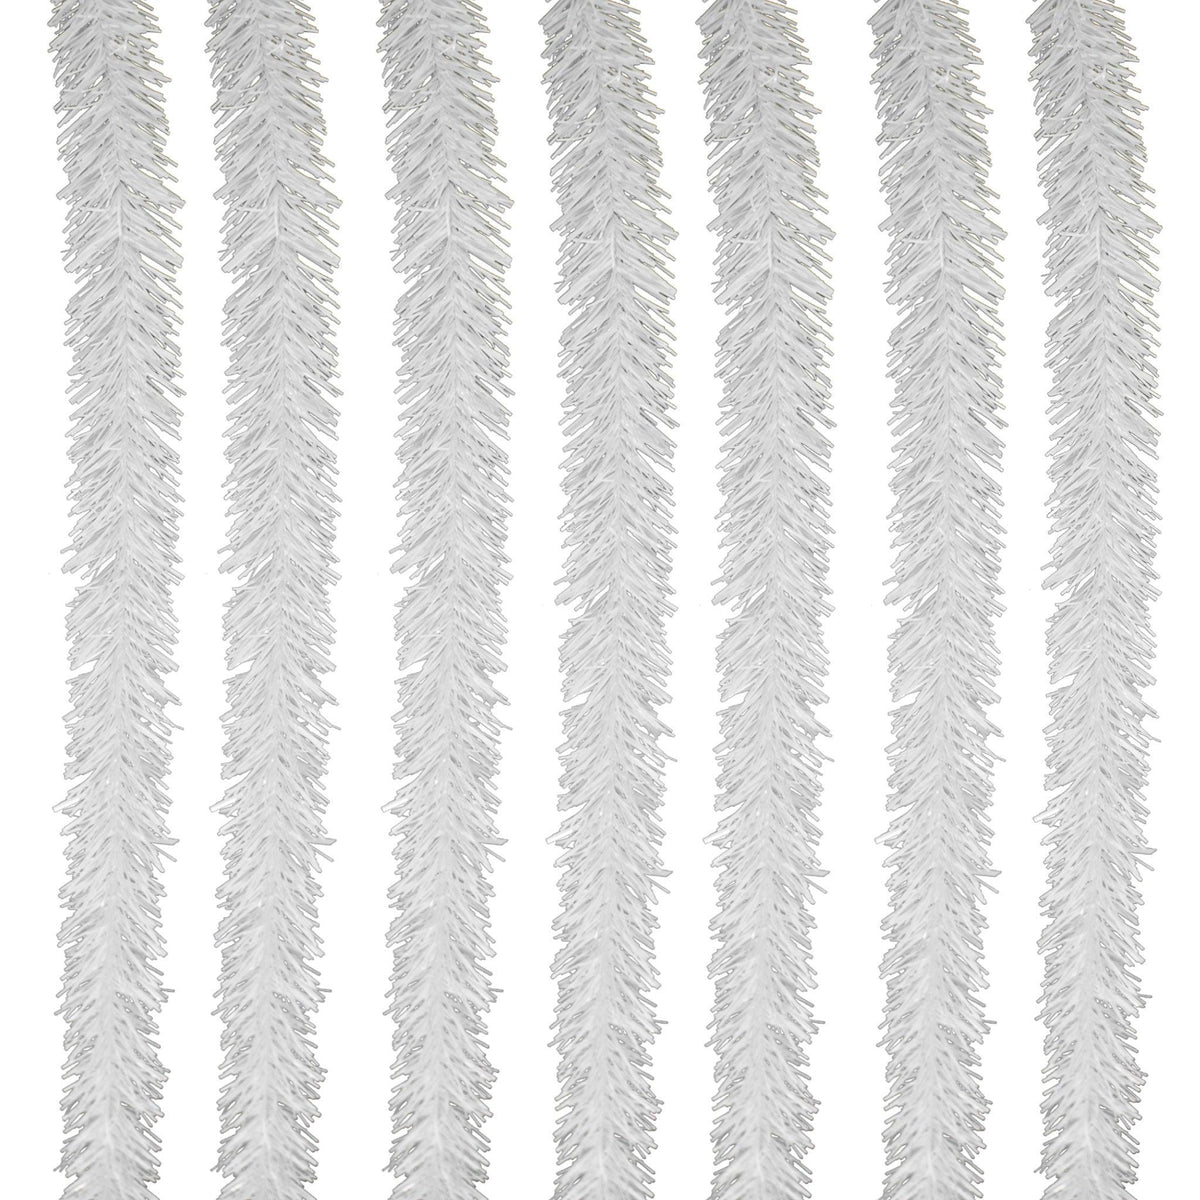 Lee Display's brand new 25ft White Tinsel Garlands and Fringe Embellishments on sale at leedisplay.com